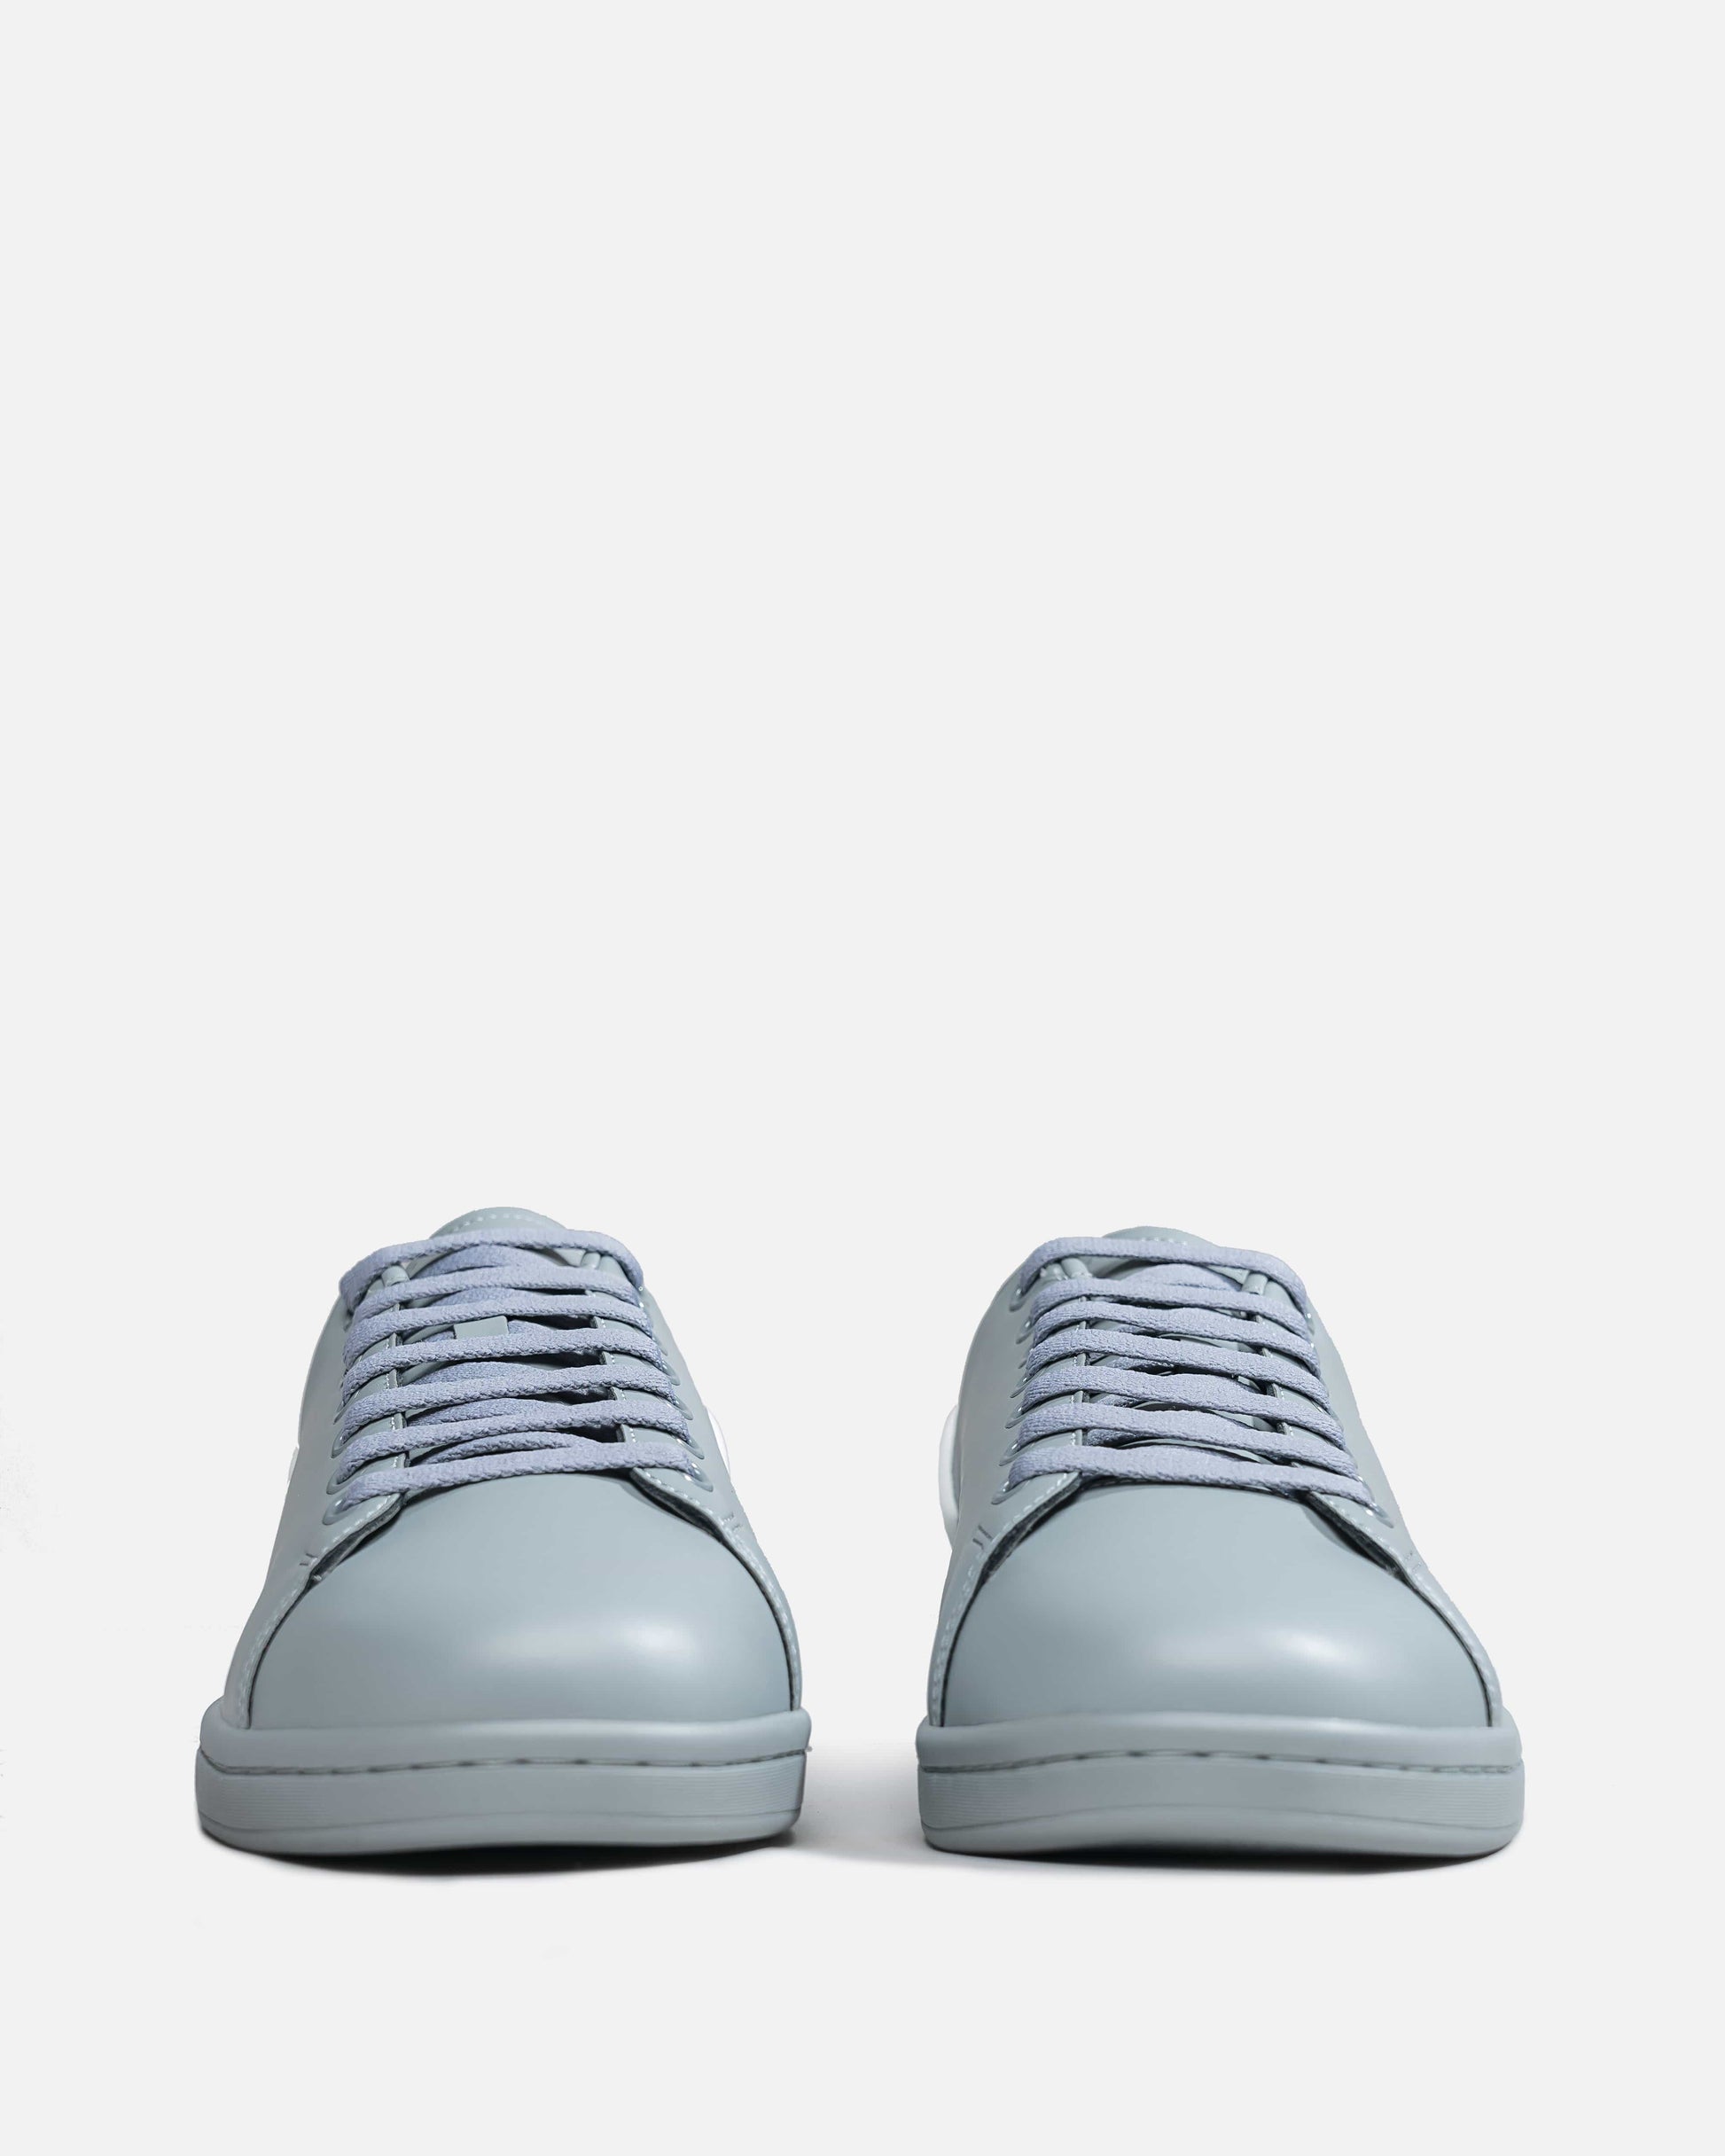 Raf Simons Men's Sneakers Orion in Grey